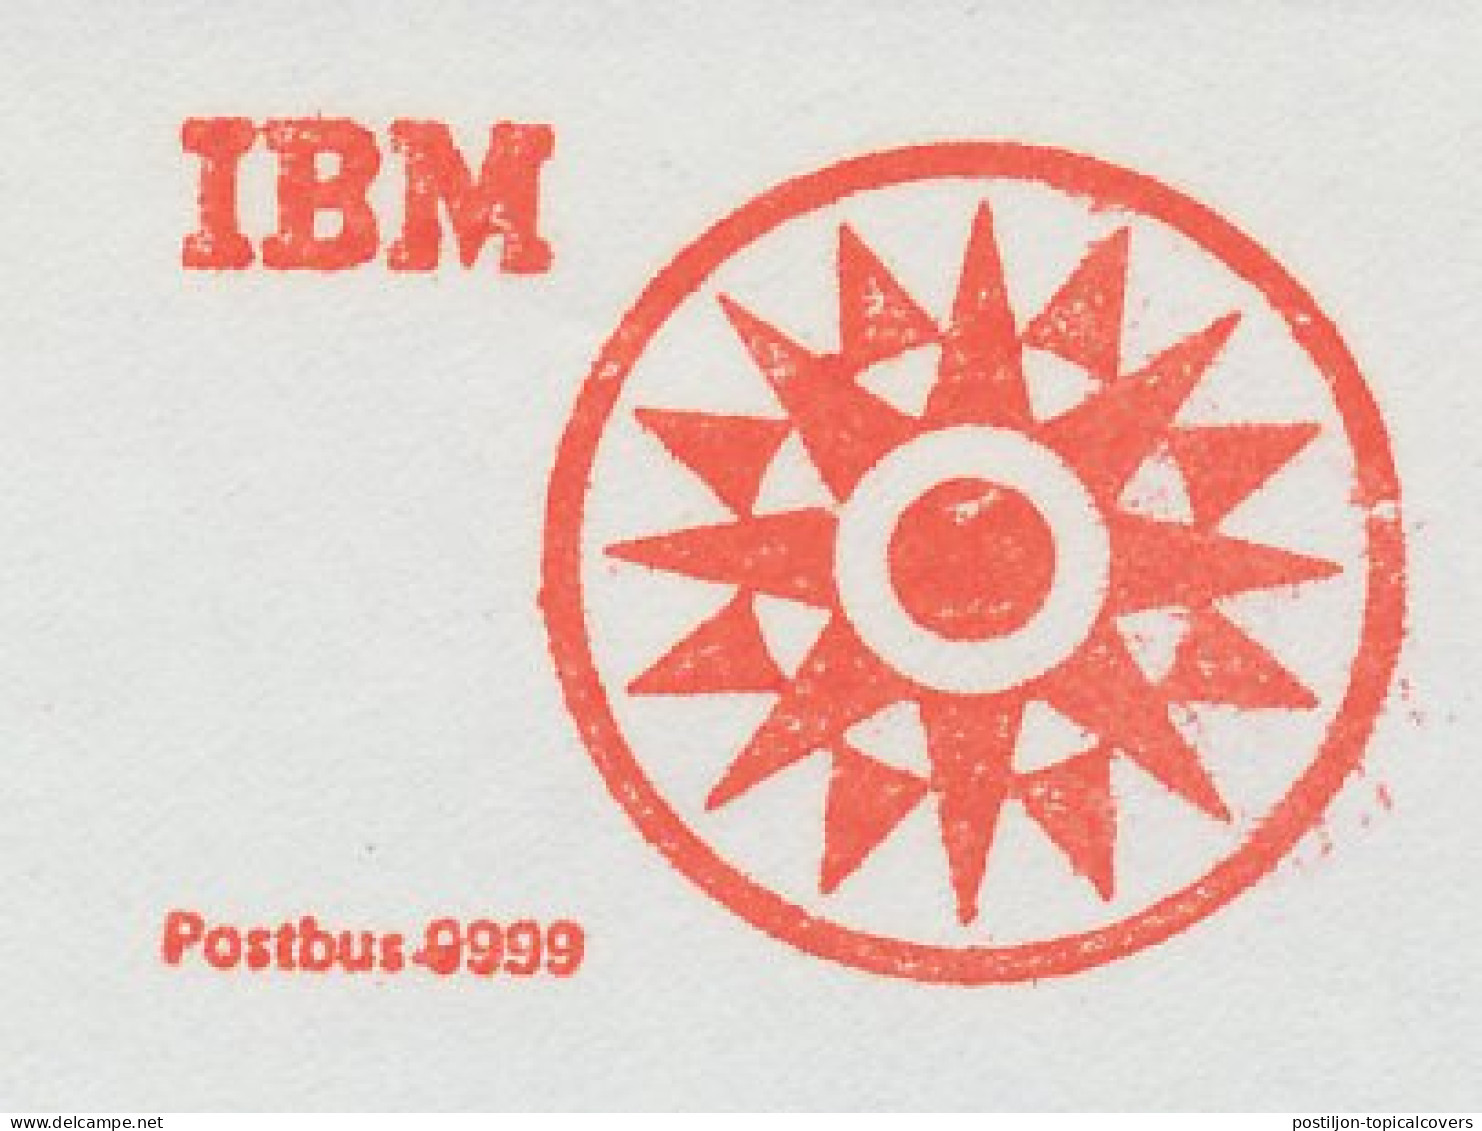 Meter Cut Netherlands 1970 IBM - Informatique